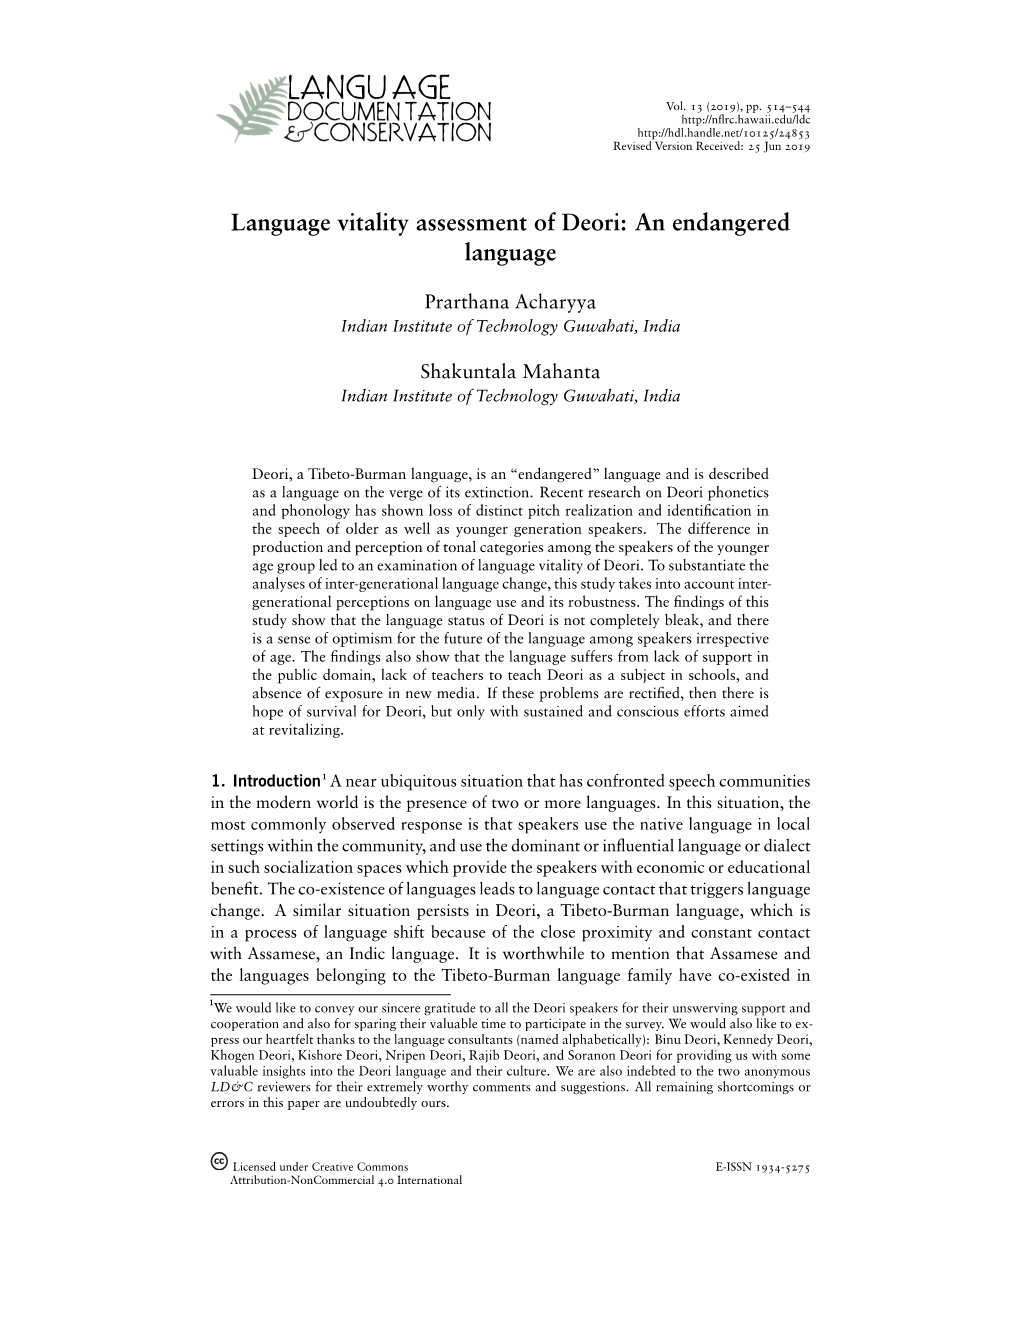 Language Vitality Assessment of Deori: an Endangered Language